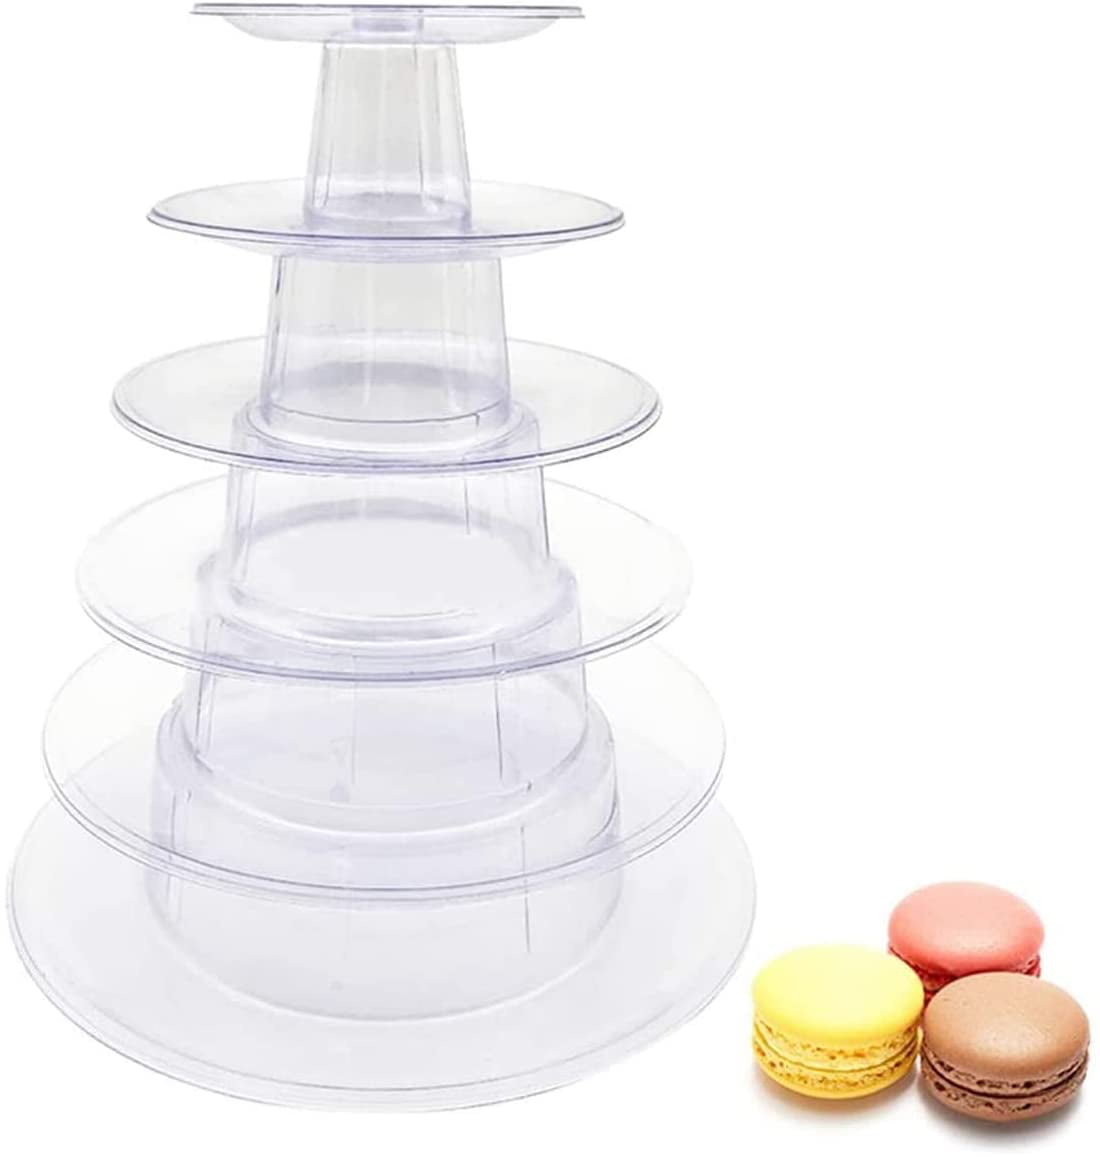 Hot 6 Tier Round Macaroon Tower Stand Cake Display Rack Party Wedding Birthday / 